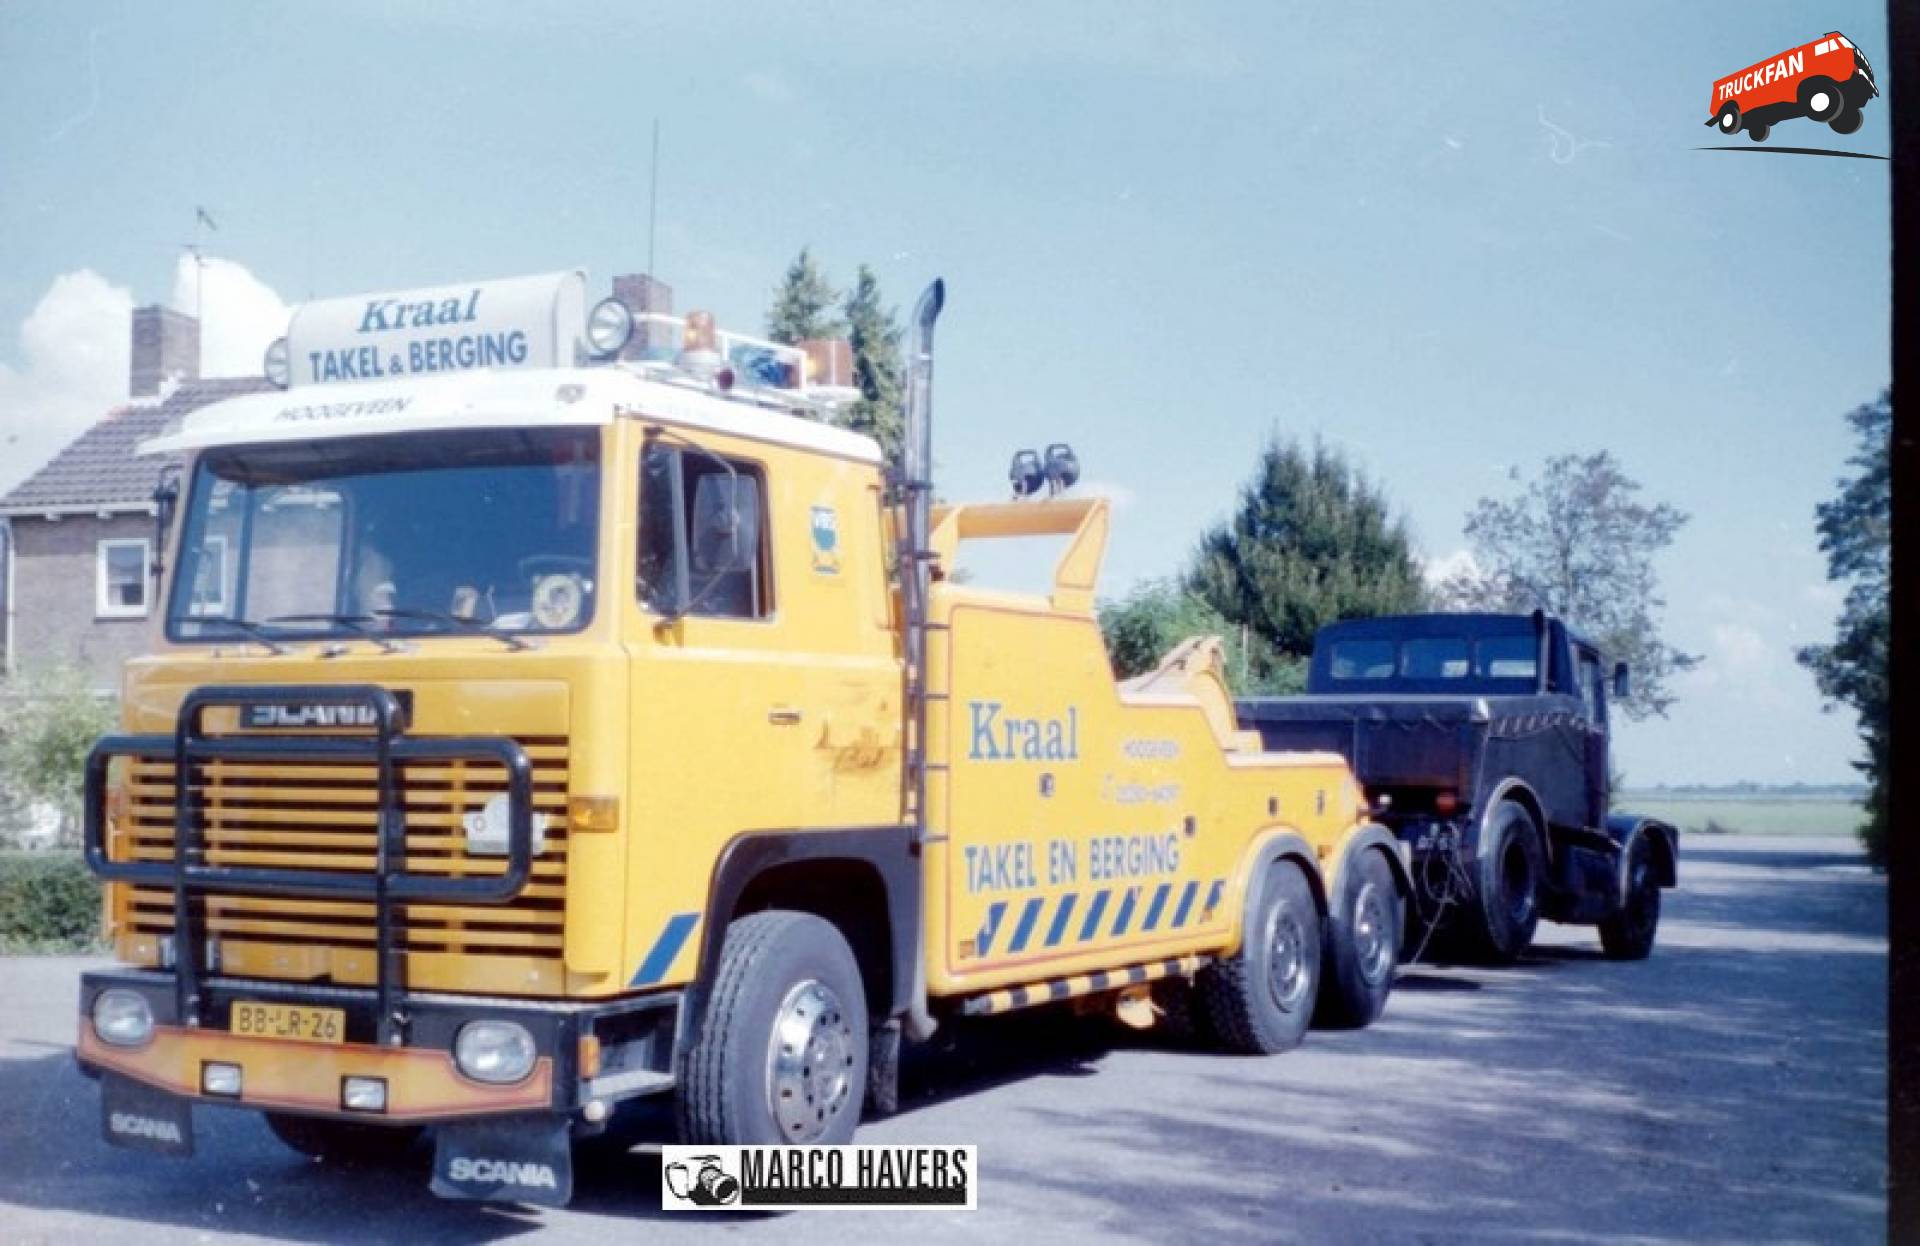 Scania 141